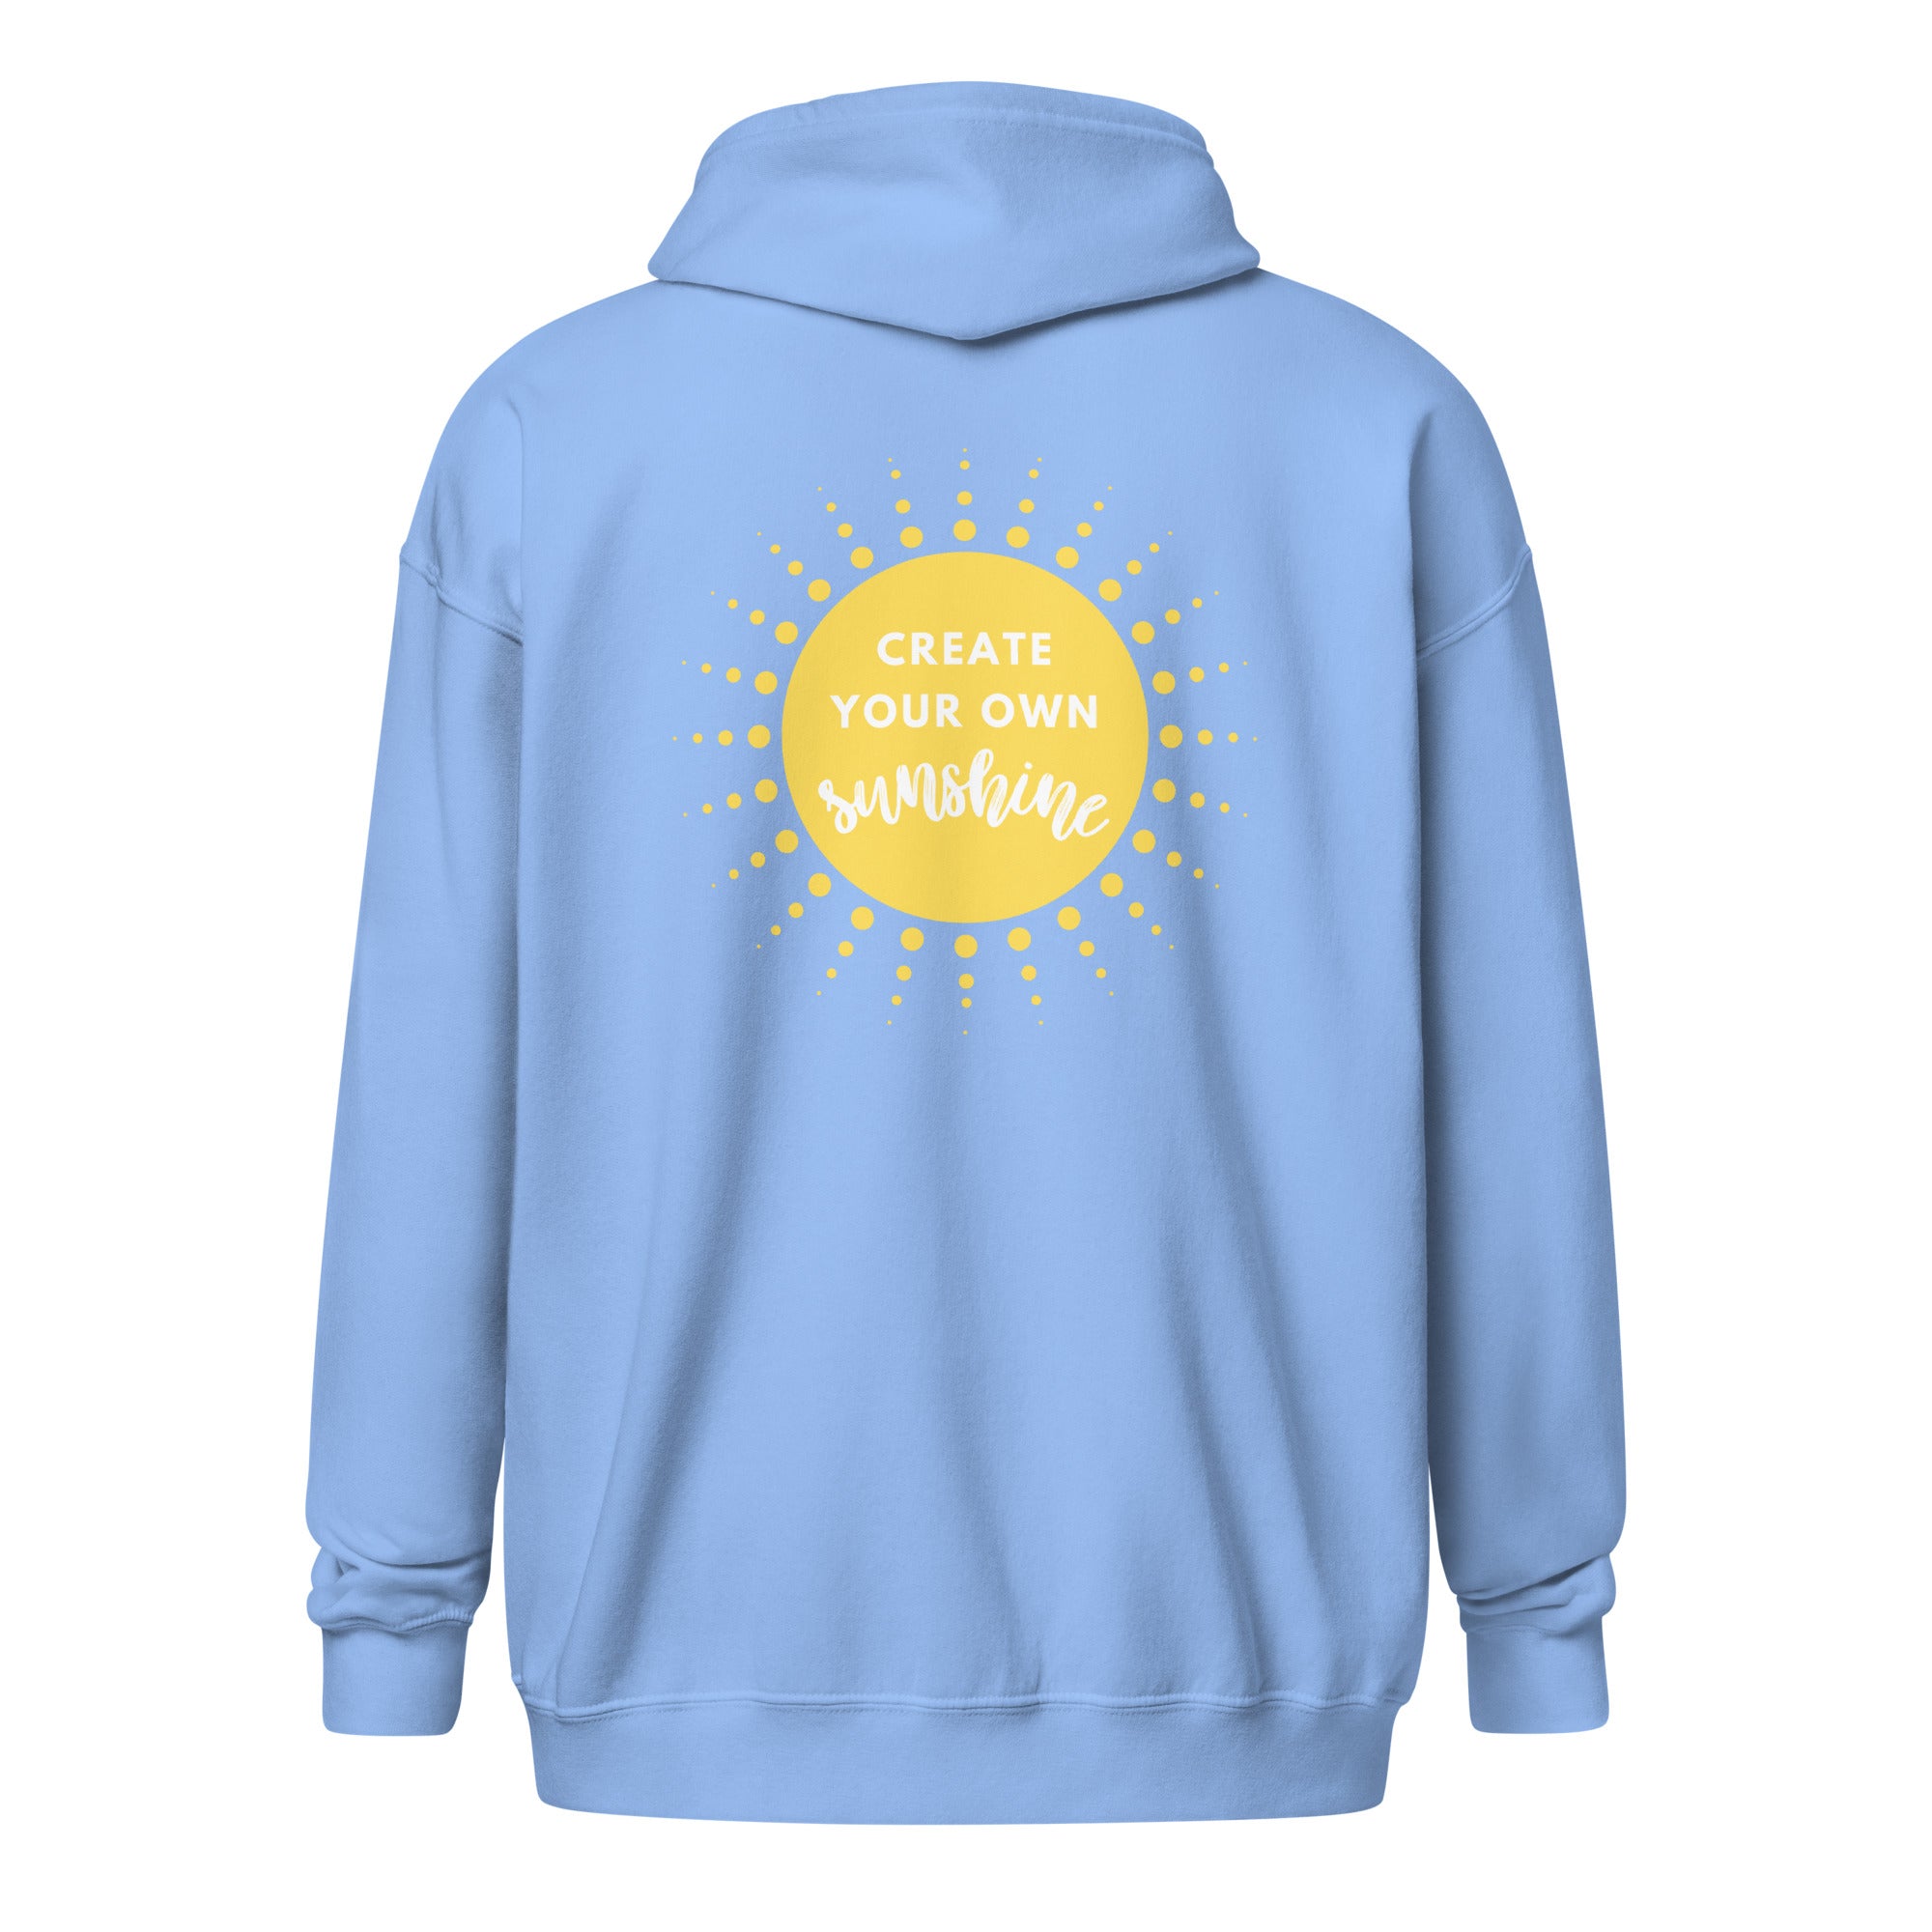 Create Your Sunshine zip hoodie